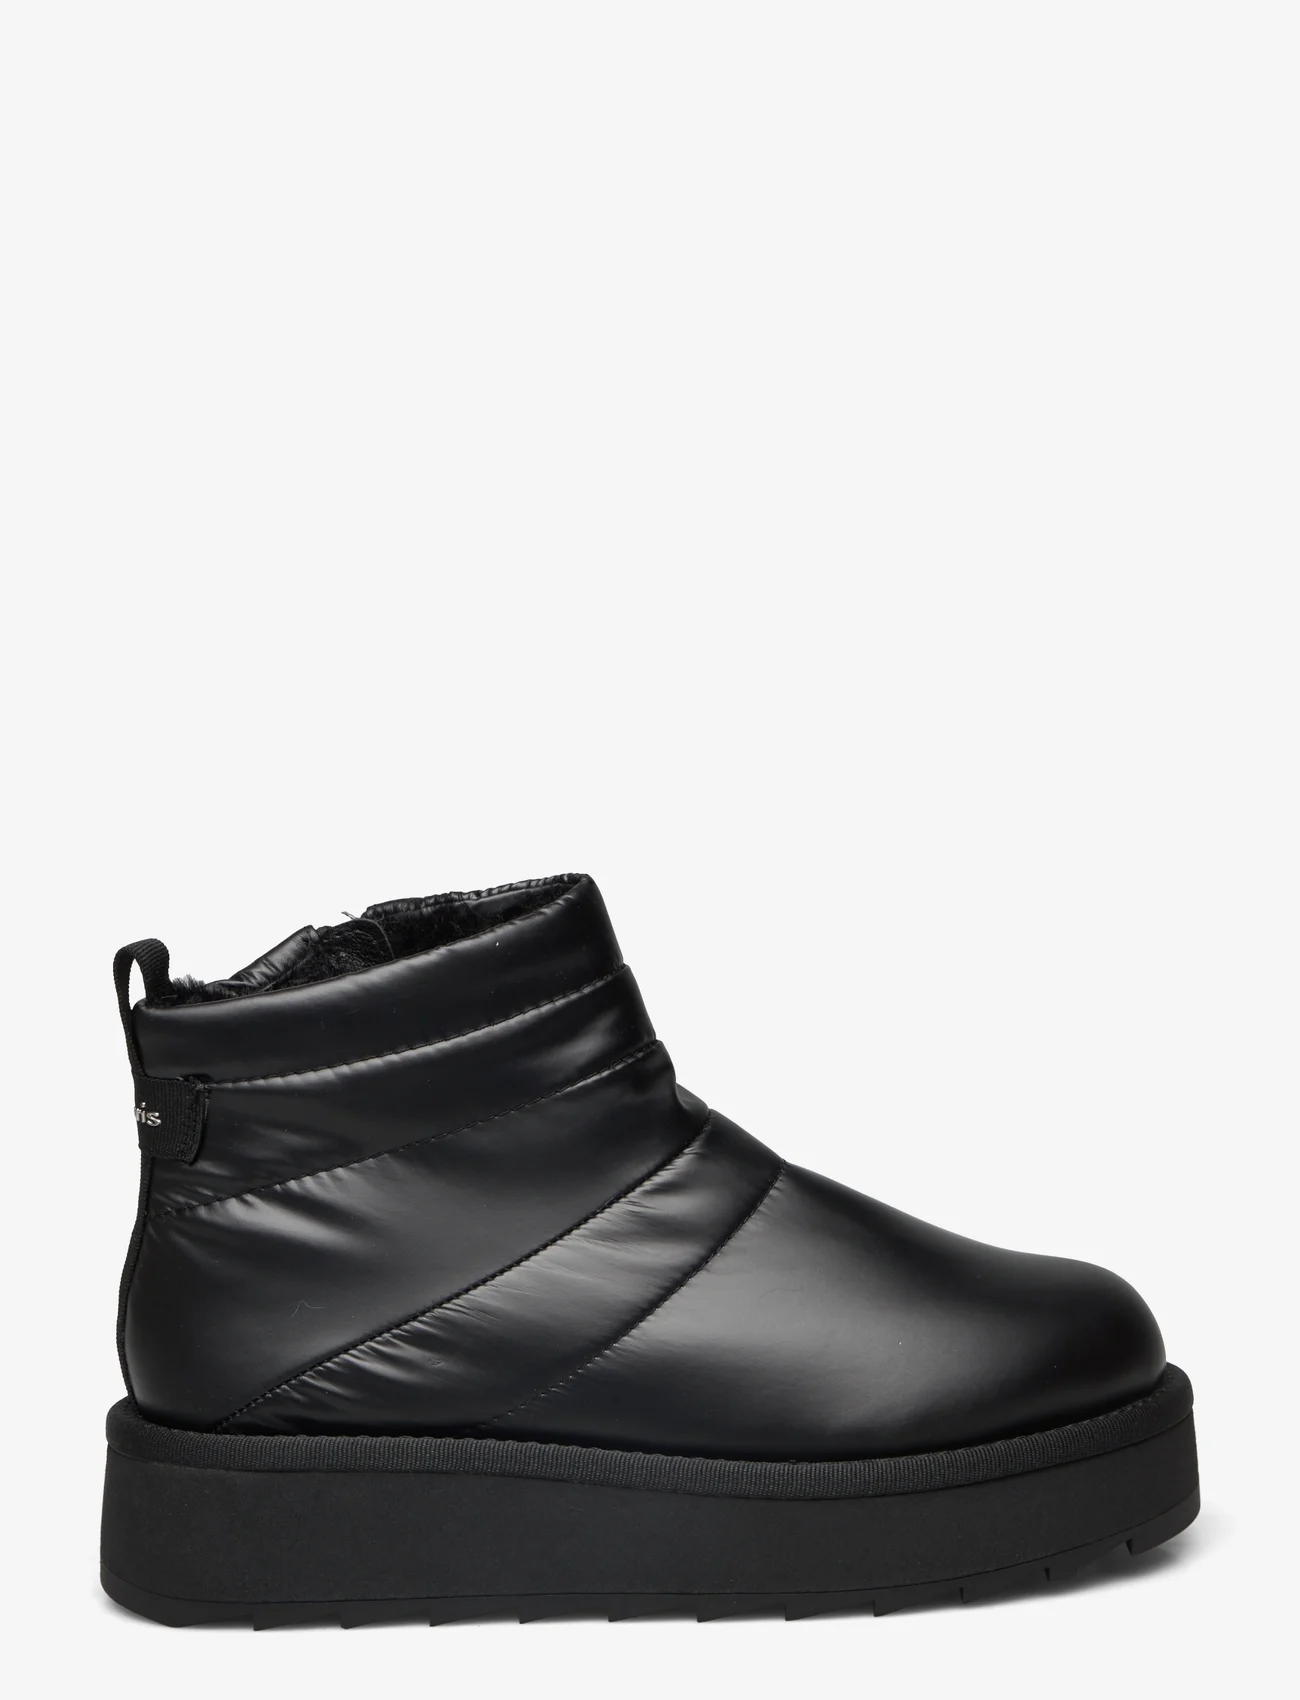 Tamaris - Women Boots - winter shoes - black - 1